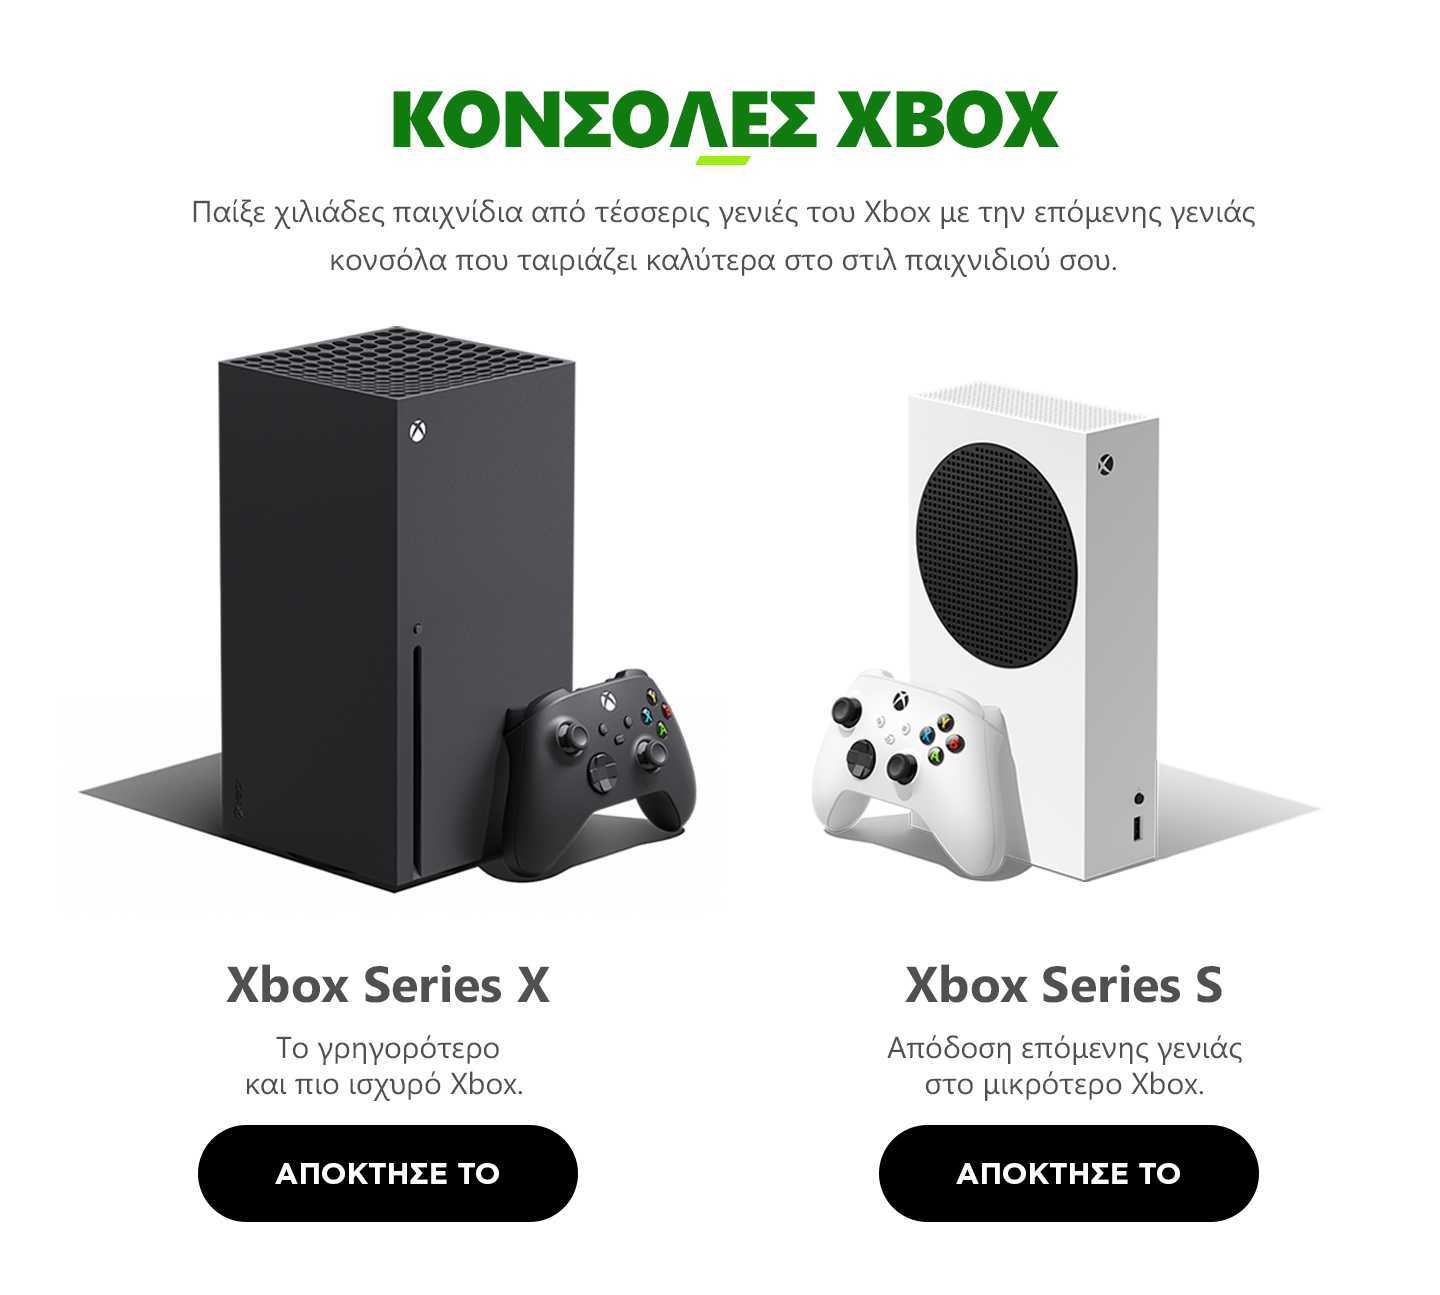 Xbox series дата выхода в россии. Xbox one x габариты. Xbox Series x габариты коробки. Xbox 360 Series x. Xbox Series s габариты.